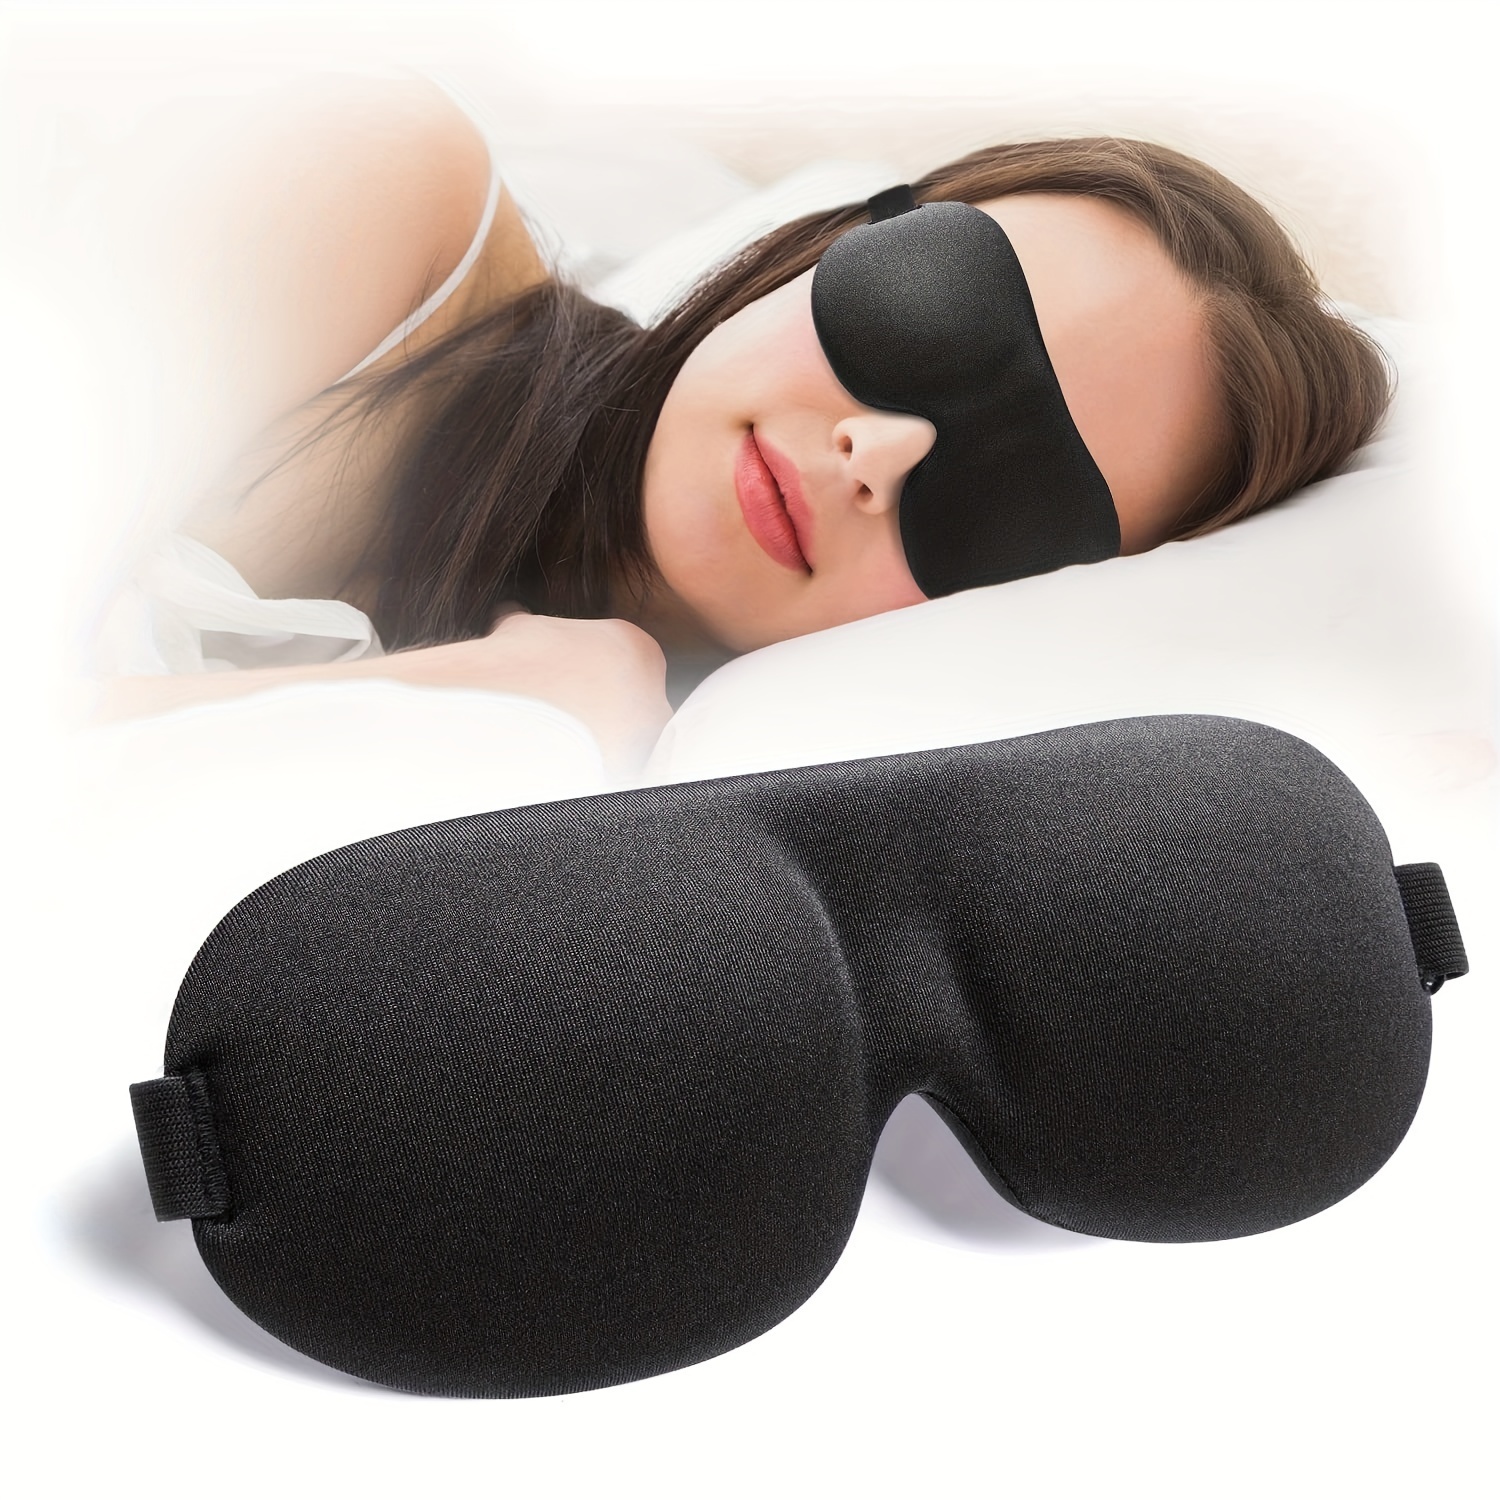 

3d Stereoscopic Sleep Eye Mask, Sleep Magic Memory Sponge Black Shading Breathable Eye Protection Travel Essentials